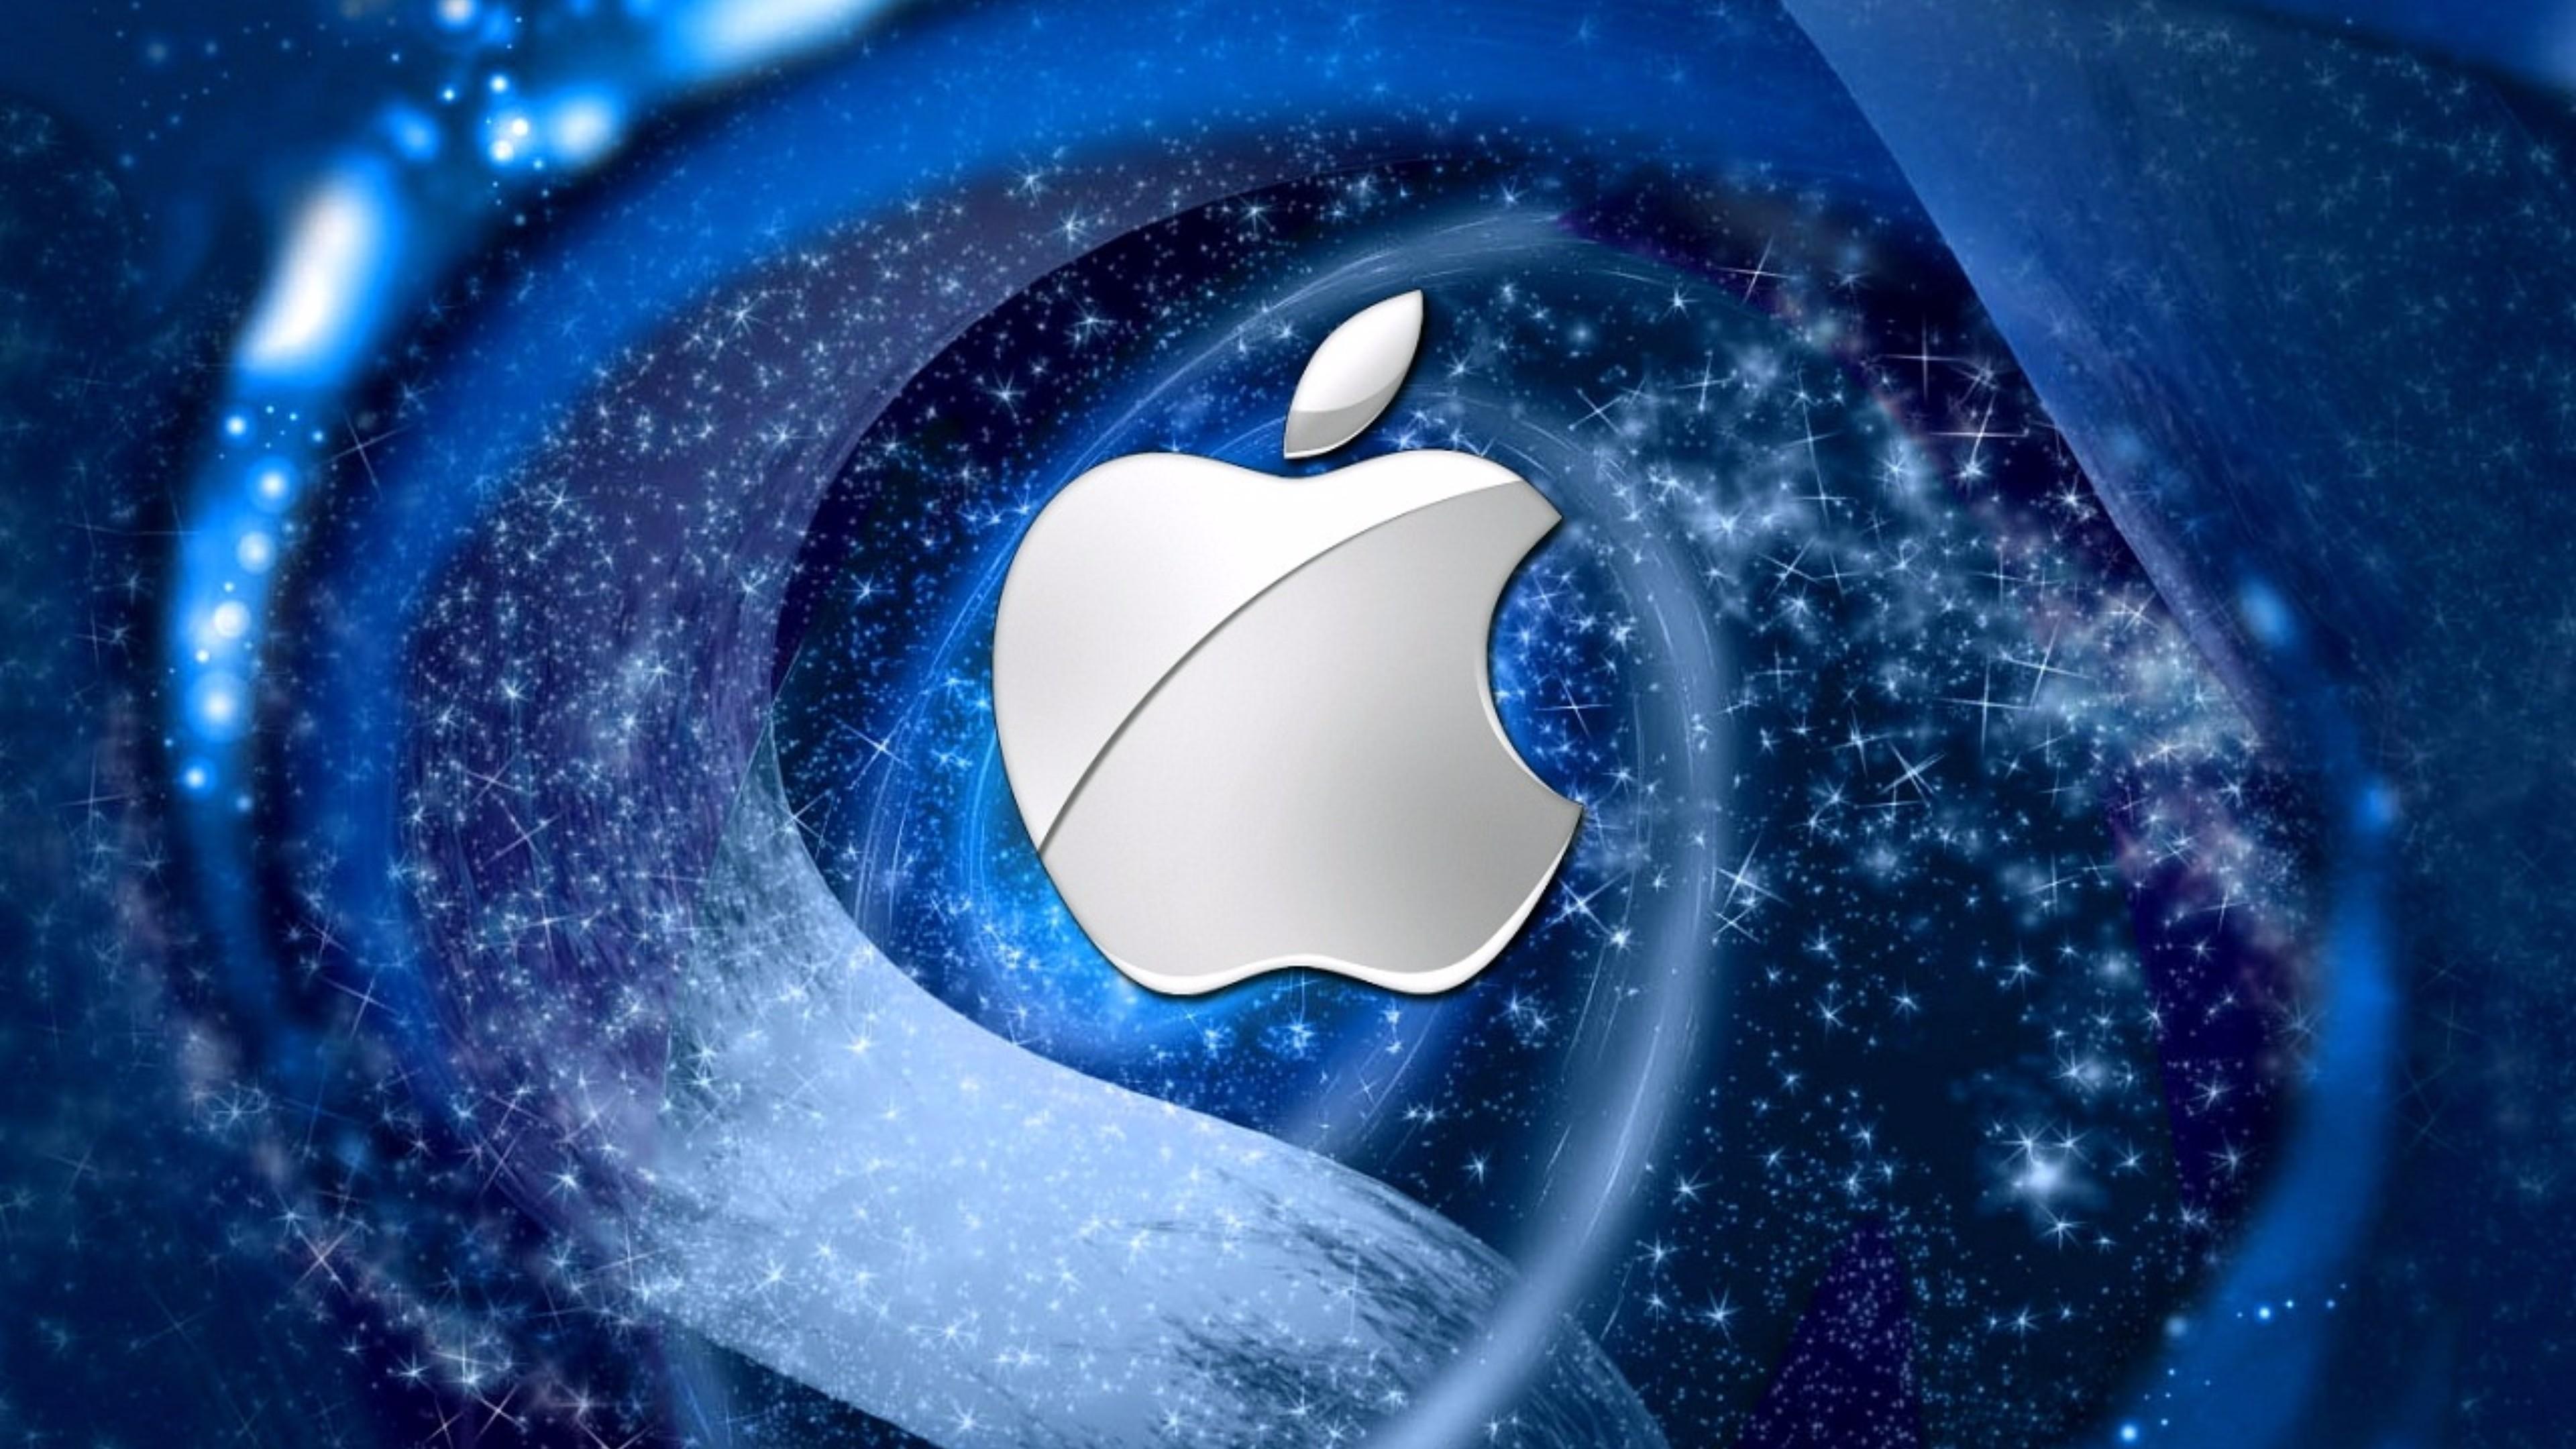 apple mac wallpaper download